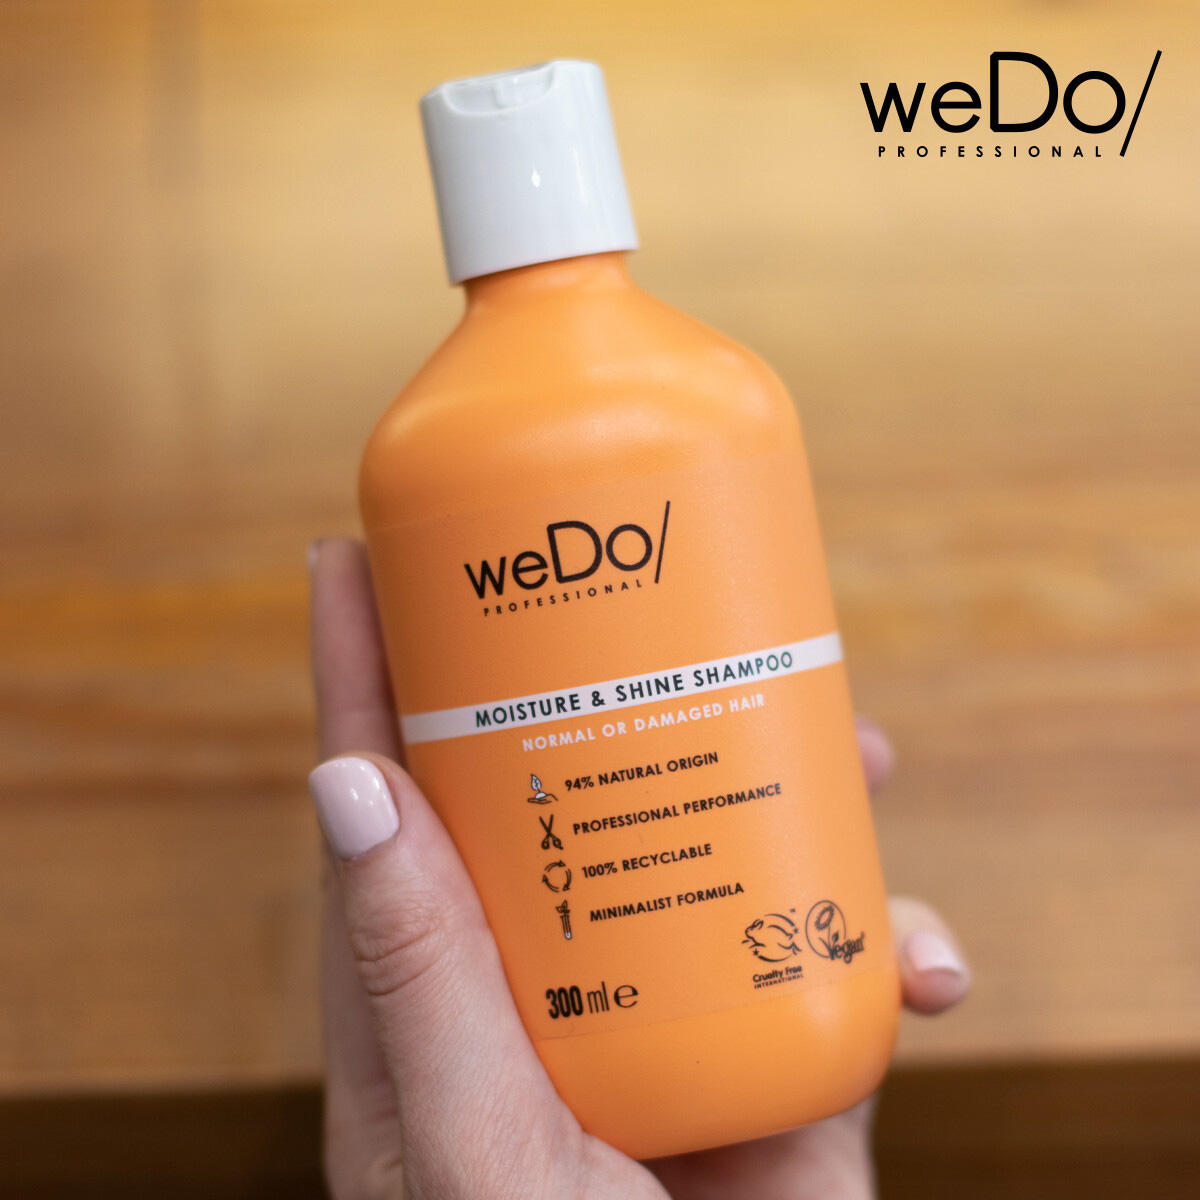 weDo/ Moisture & Shine Shampoo 300 ml - 3